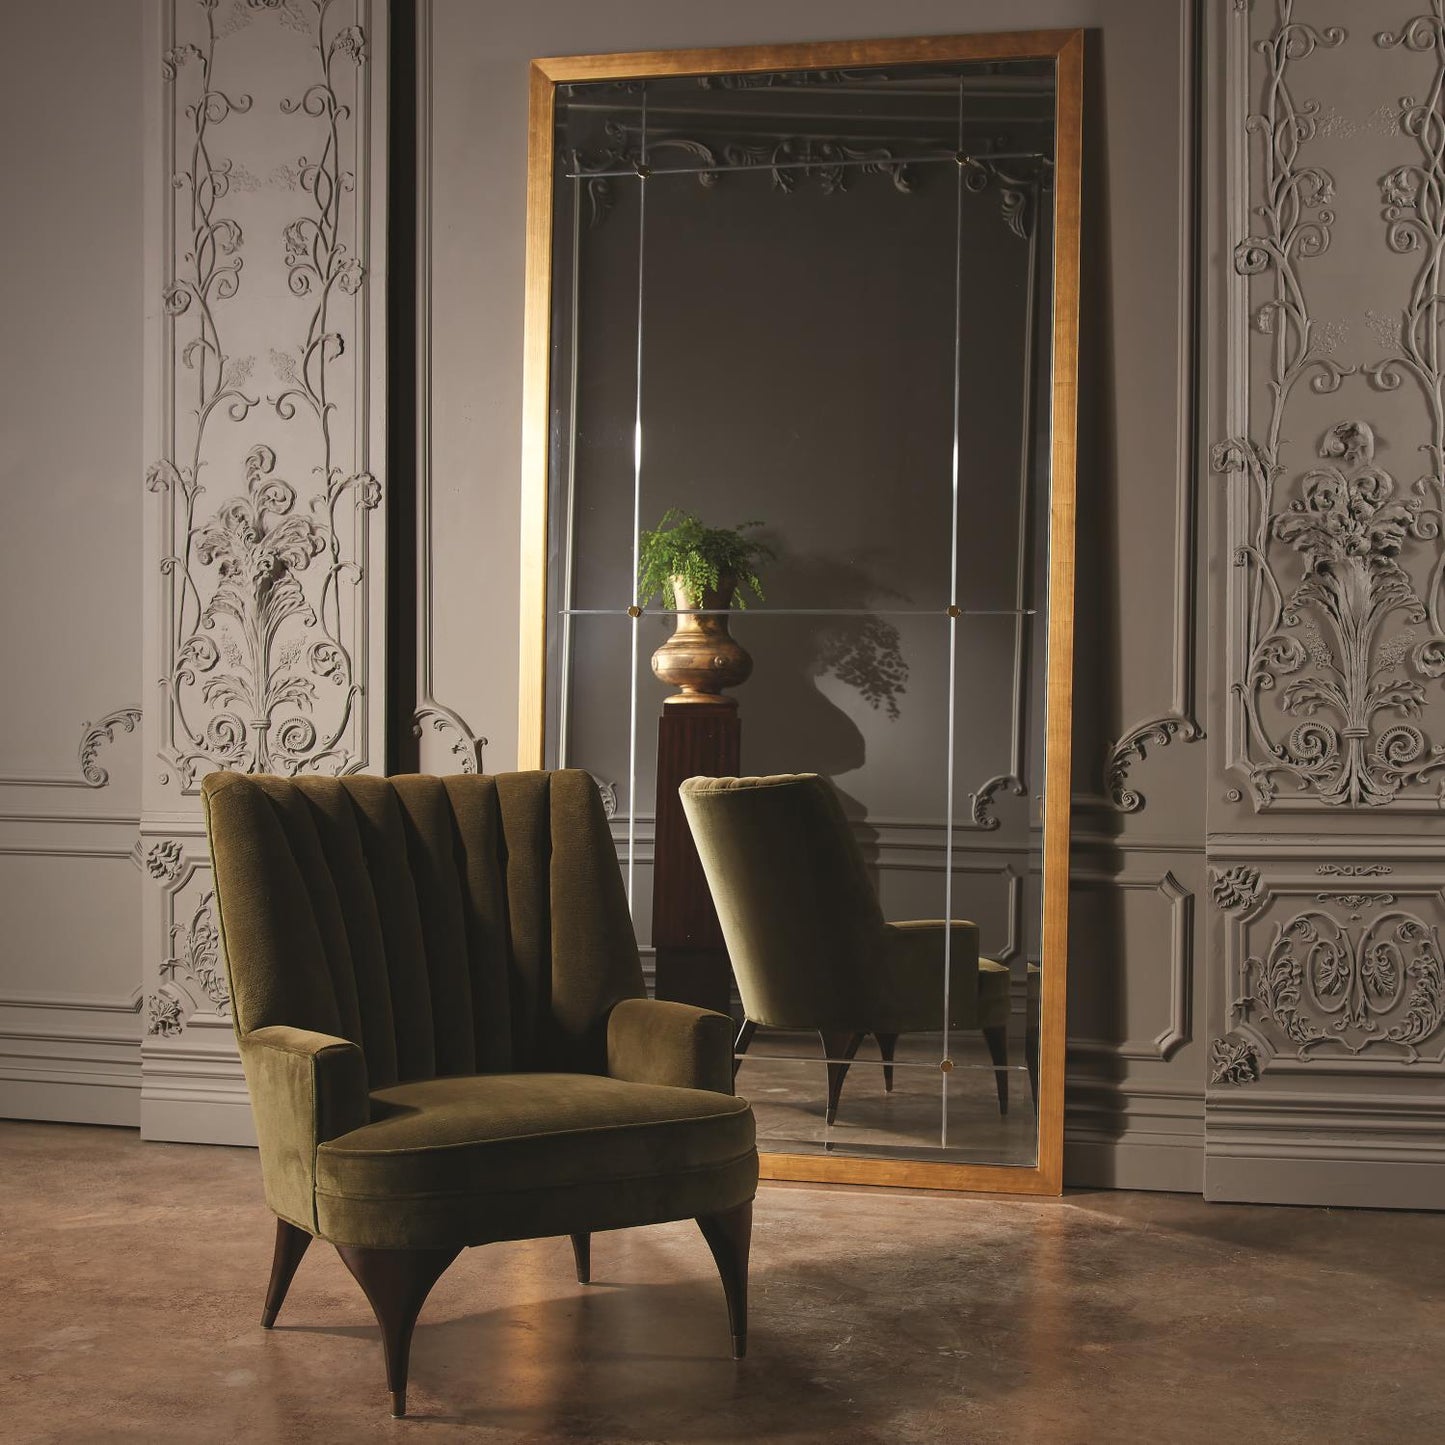 Duncan Chair - Moss Velvet - Grats Decor Interior Design & Build Inc.